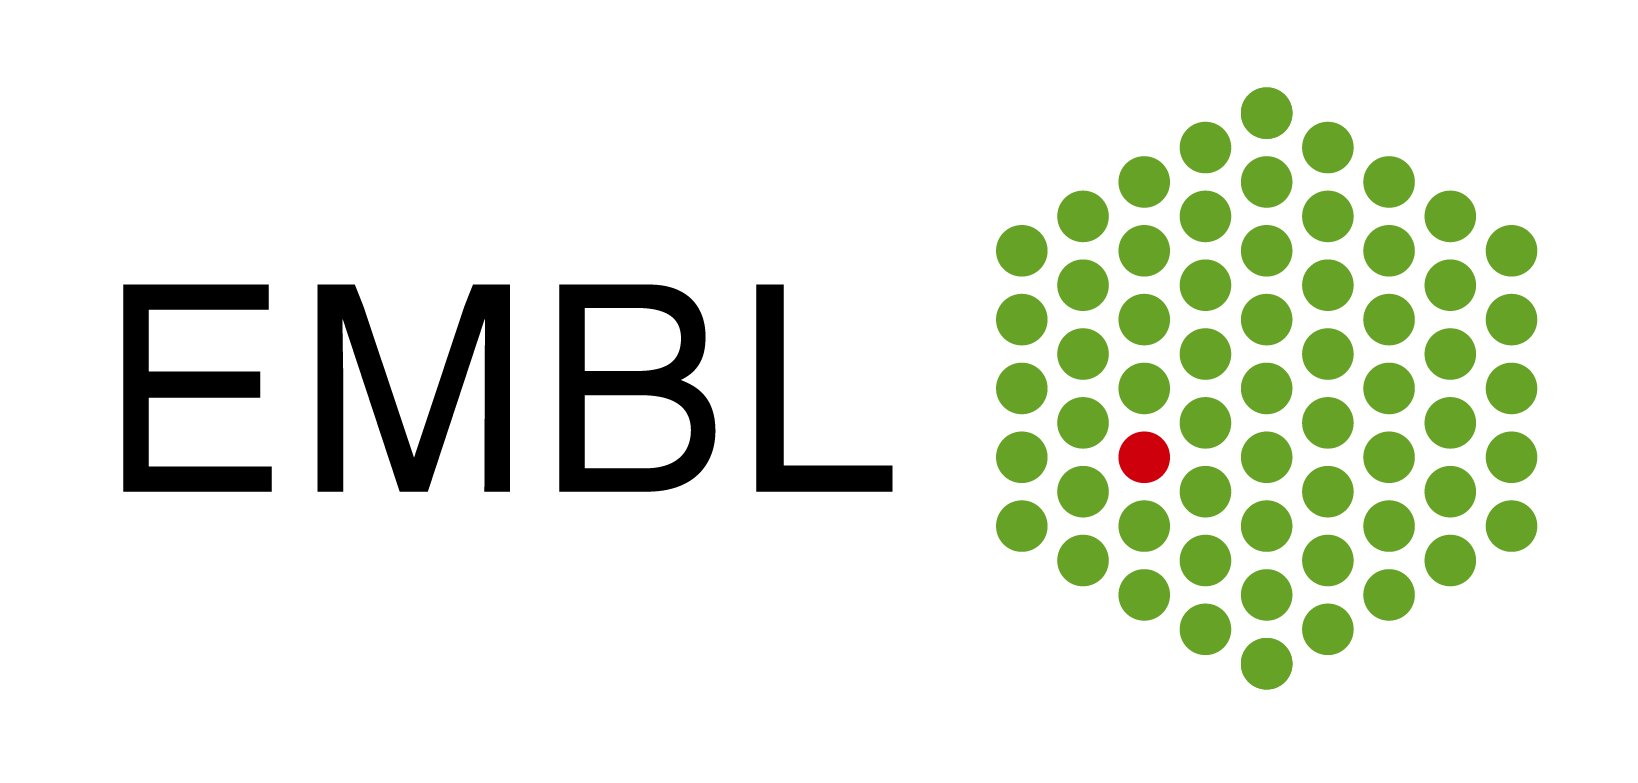 EMBL logo colour